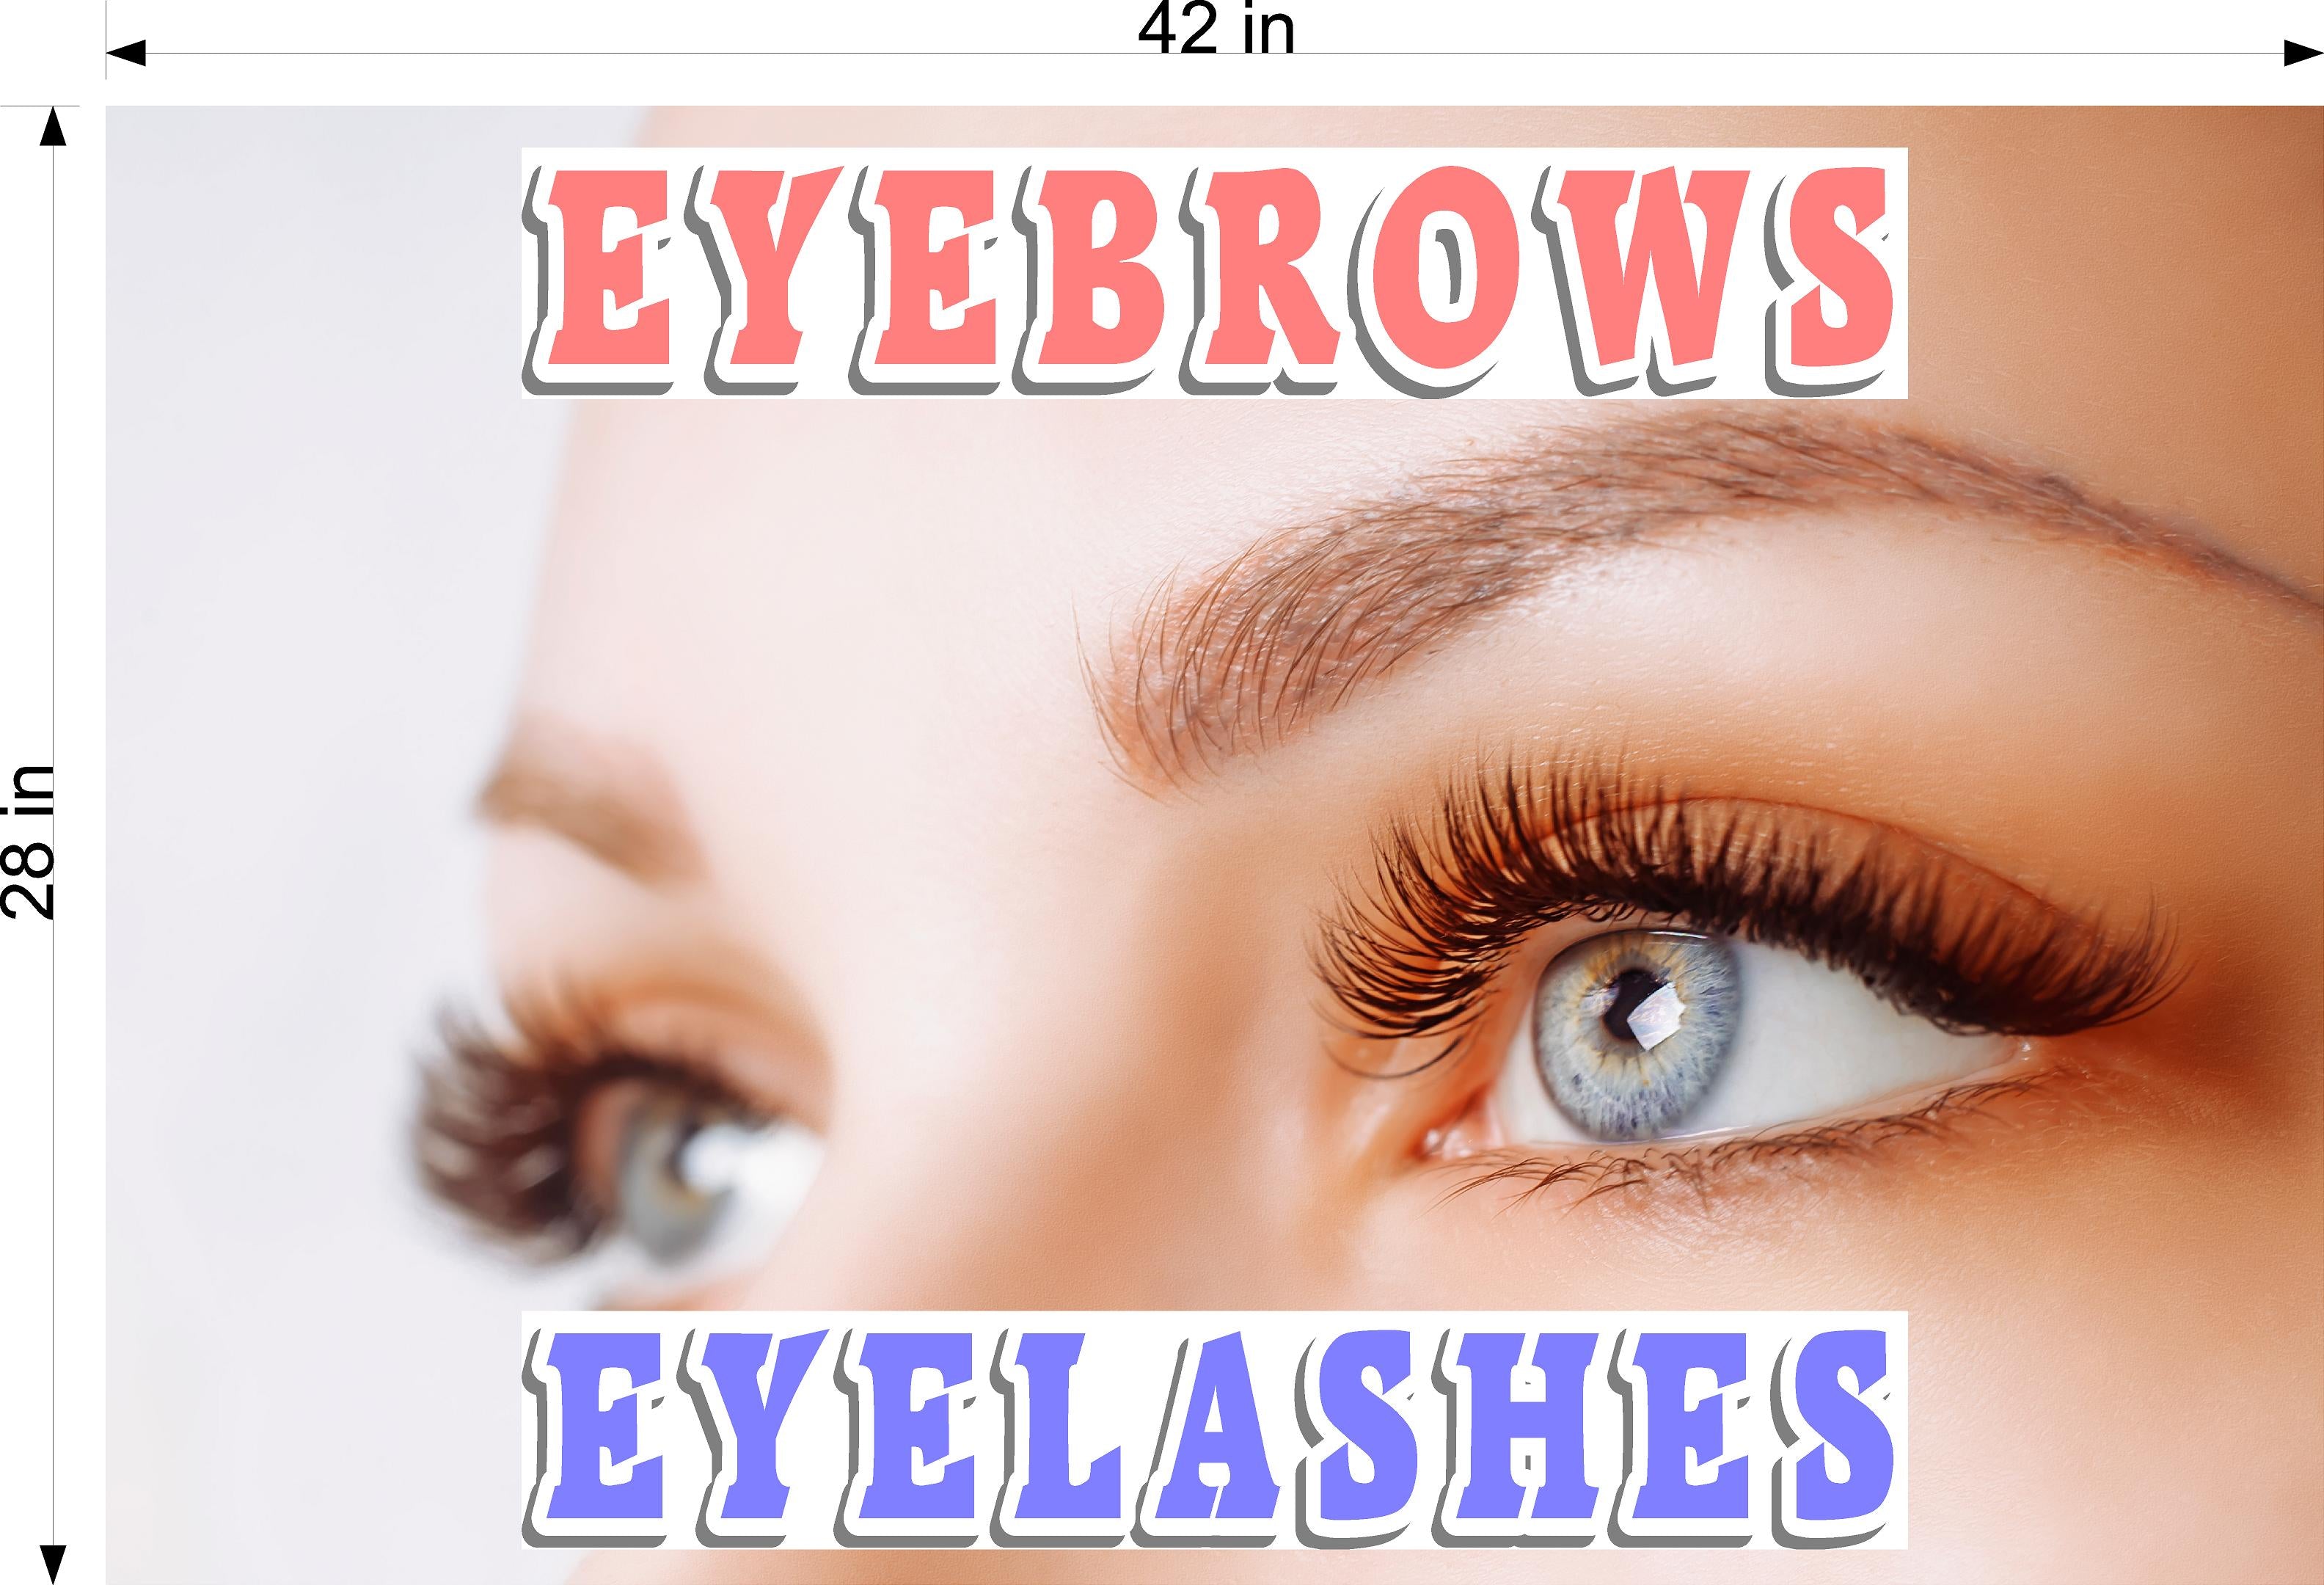 Eyebrows 14 Perforated Mesh One Way Vision See-Through Window Vinyl Salon Sign Eyelashes Horizontal